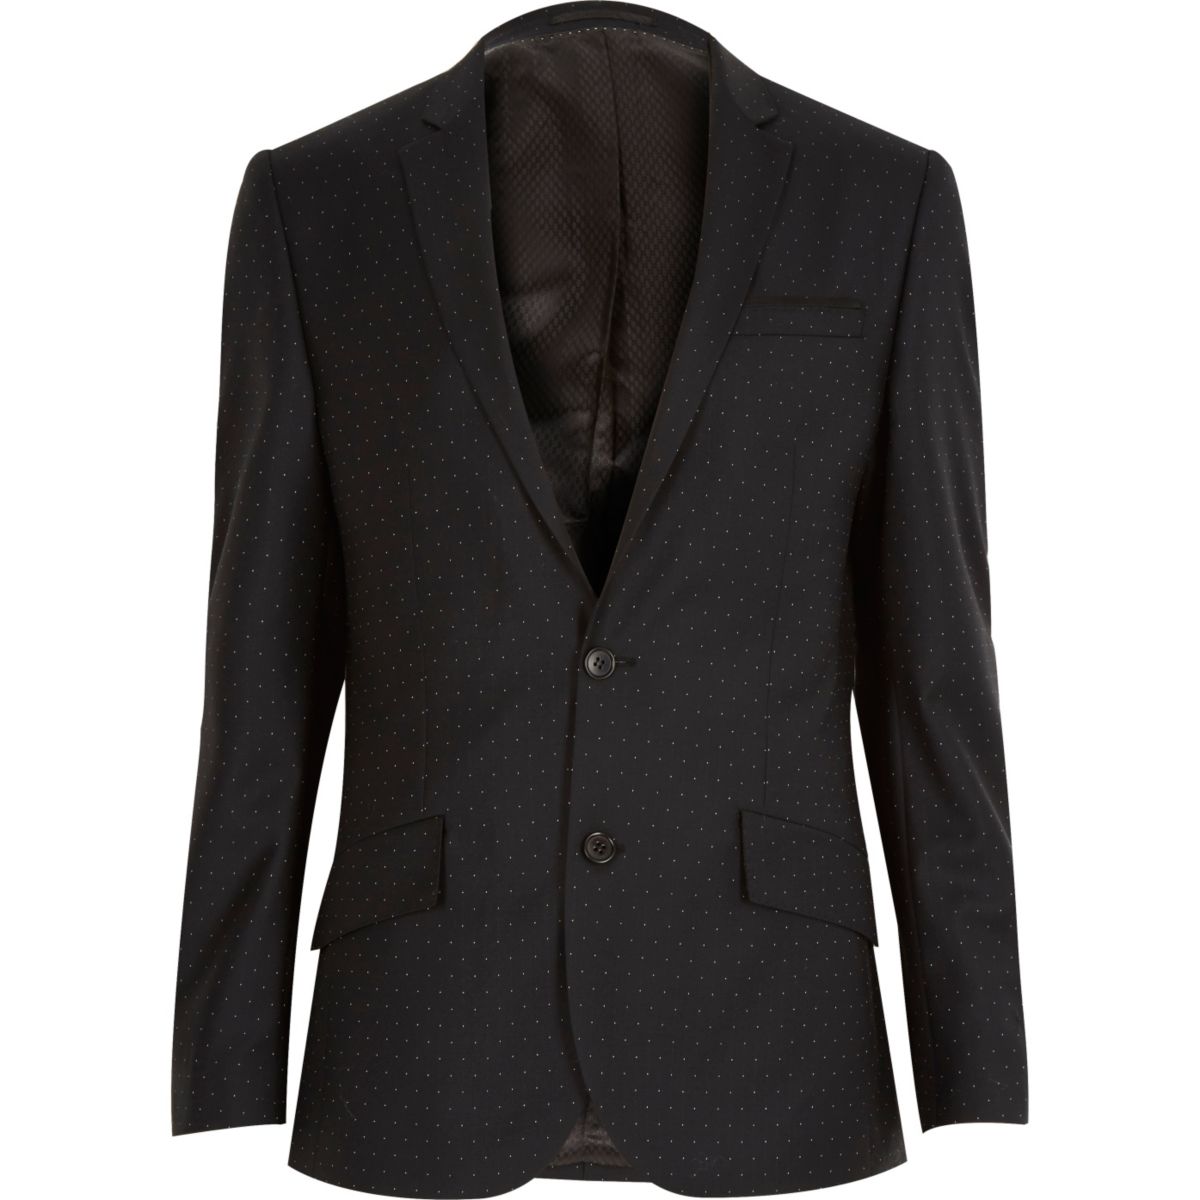 Black polka dot wool slim tux jacket - Blazers - Sale - men